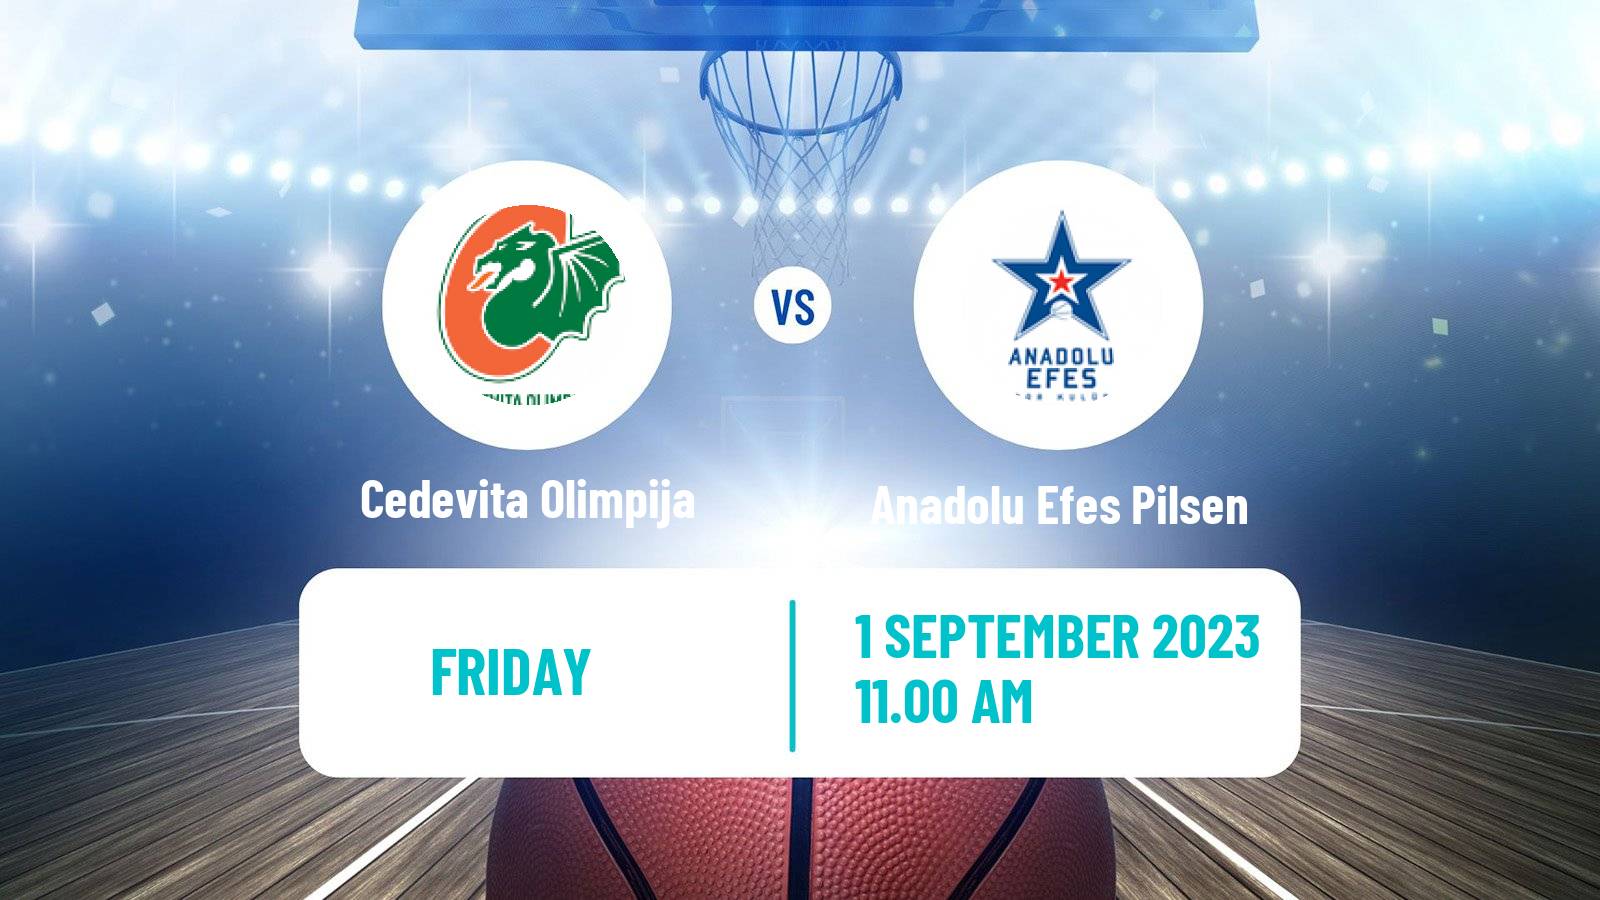 Basketball Club Friendly Basketball Cedevita Olimpija - Anadolu Efes Pilsen